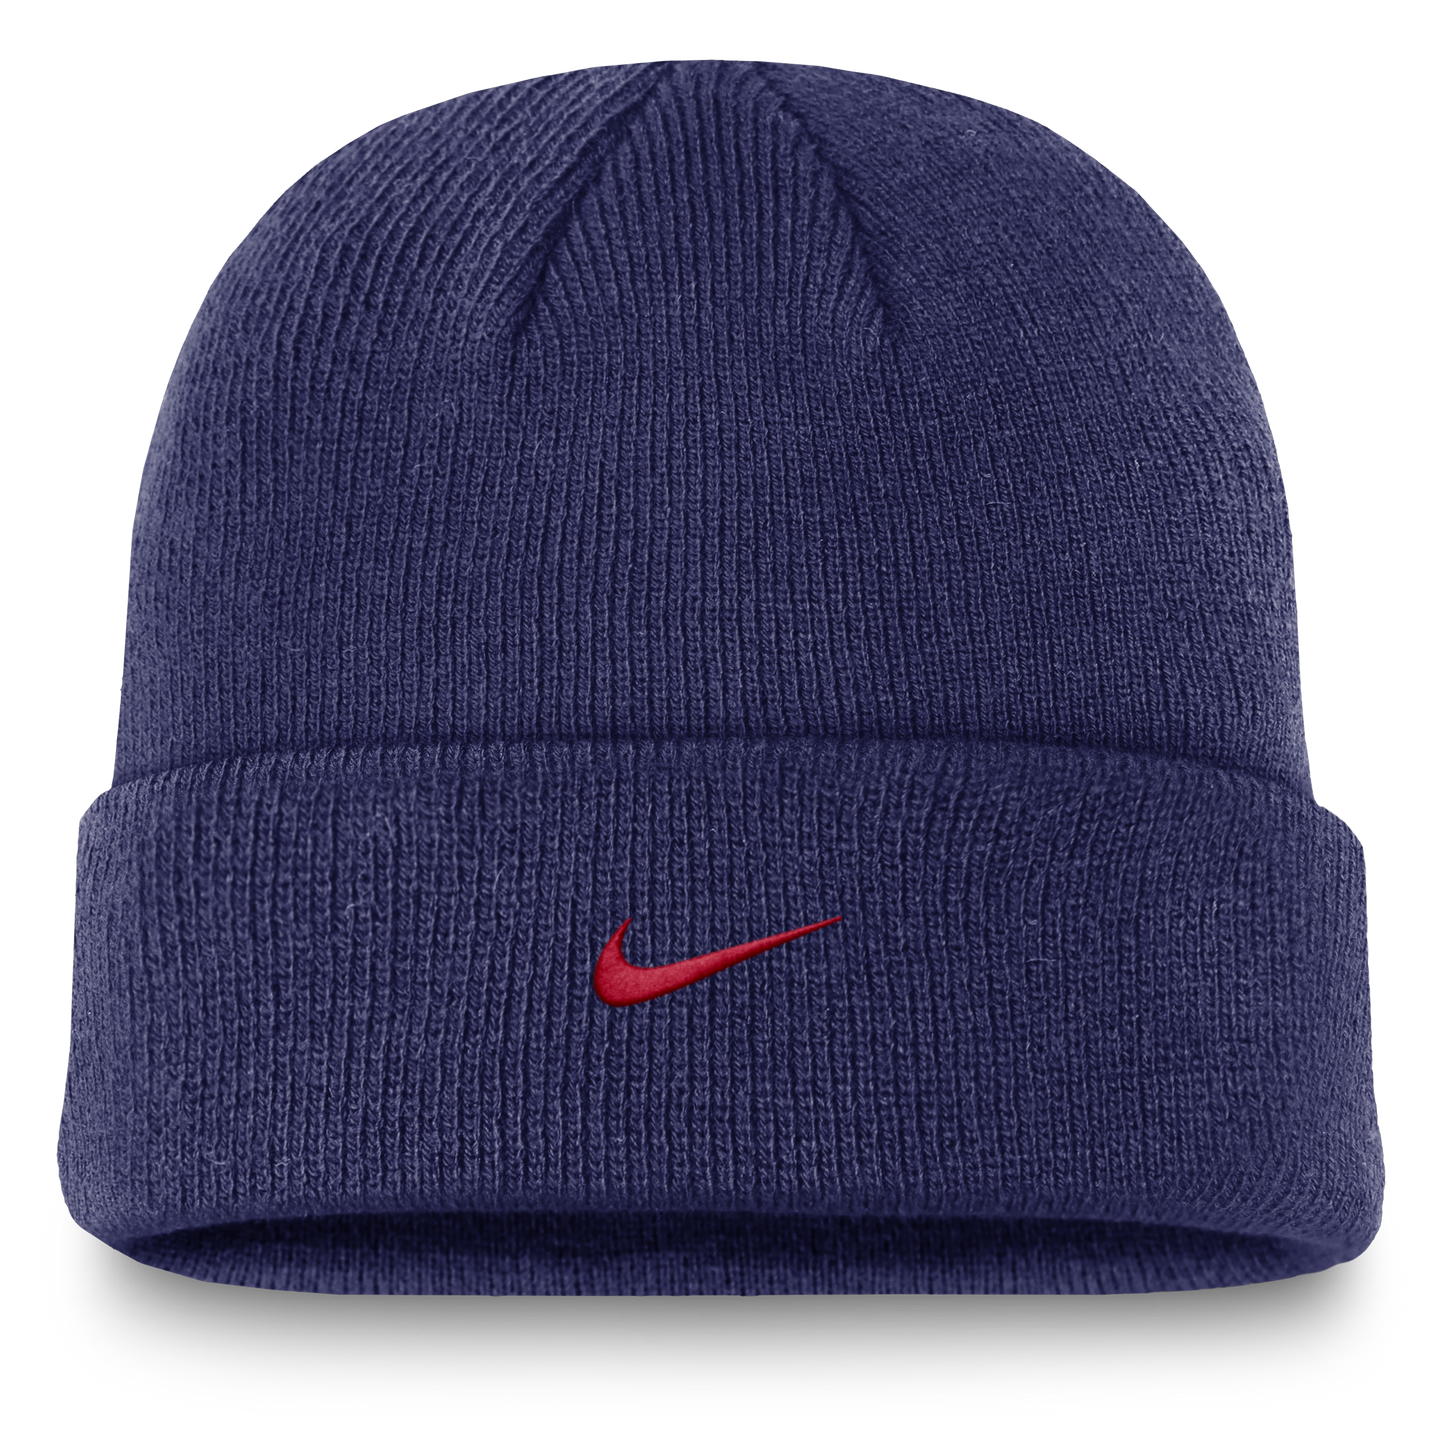 Chicago Cubs Nike Cuffed Blue Beanie C Logo Winter 2024 Knit Hat